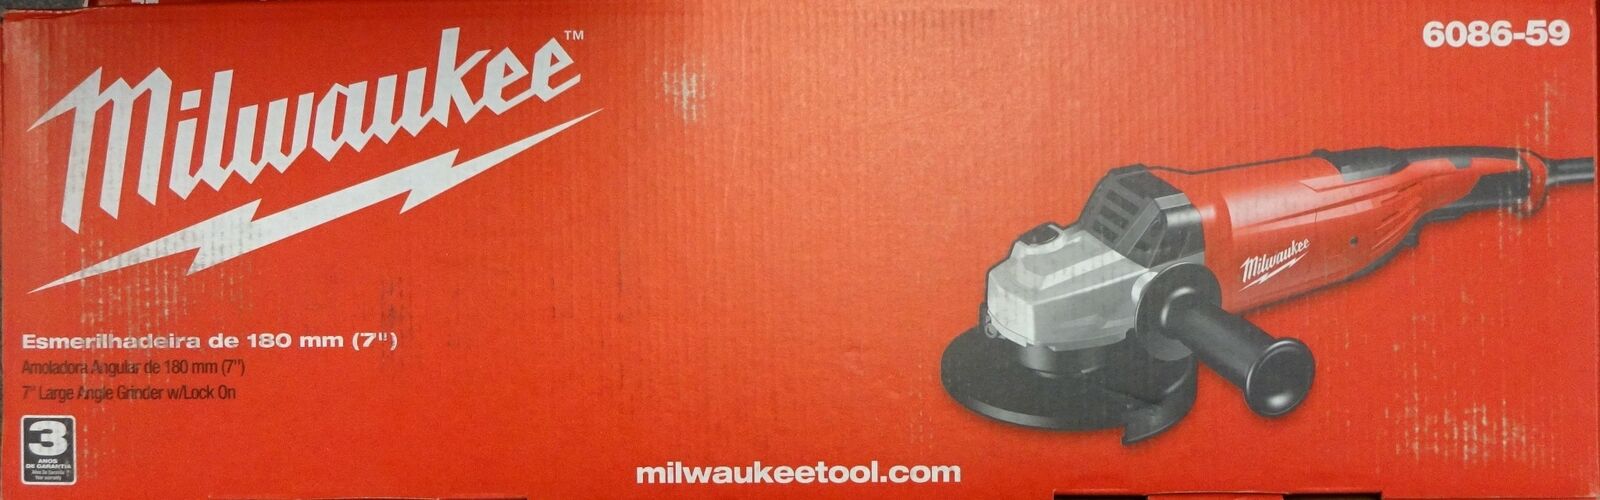 Milwaukee 6086-59 180mm Angle Grinder 220V Type C Plug (Intl. model)